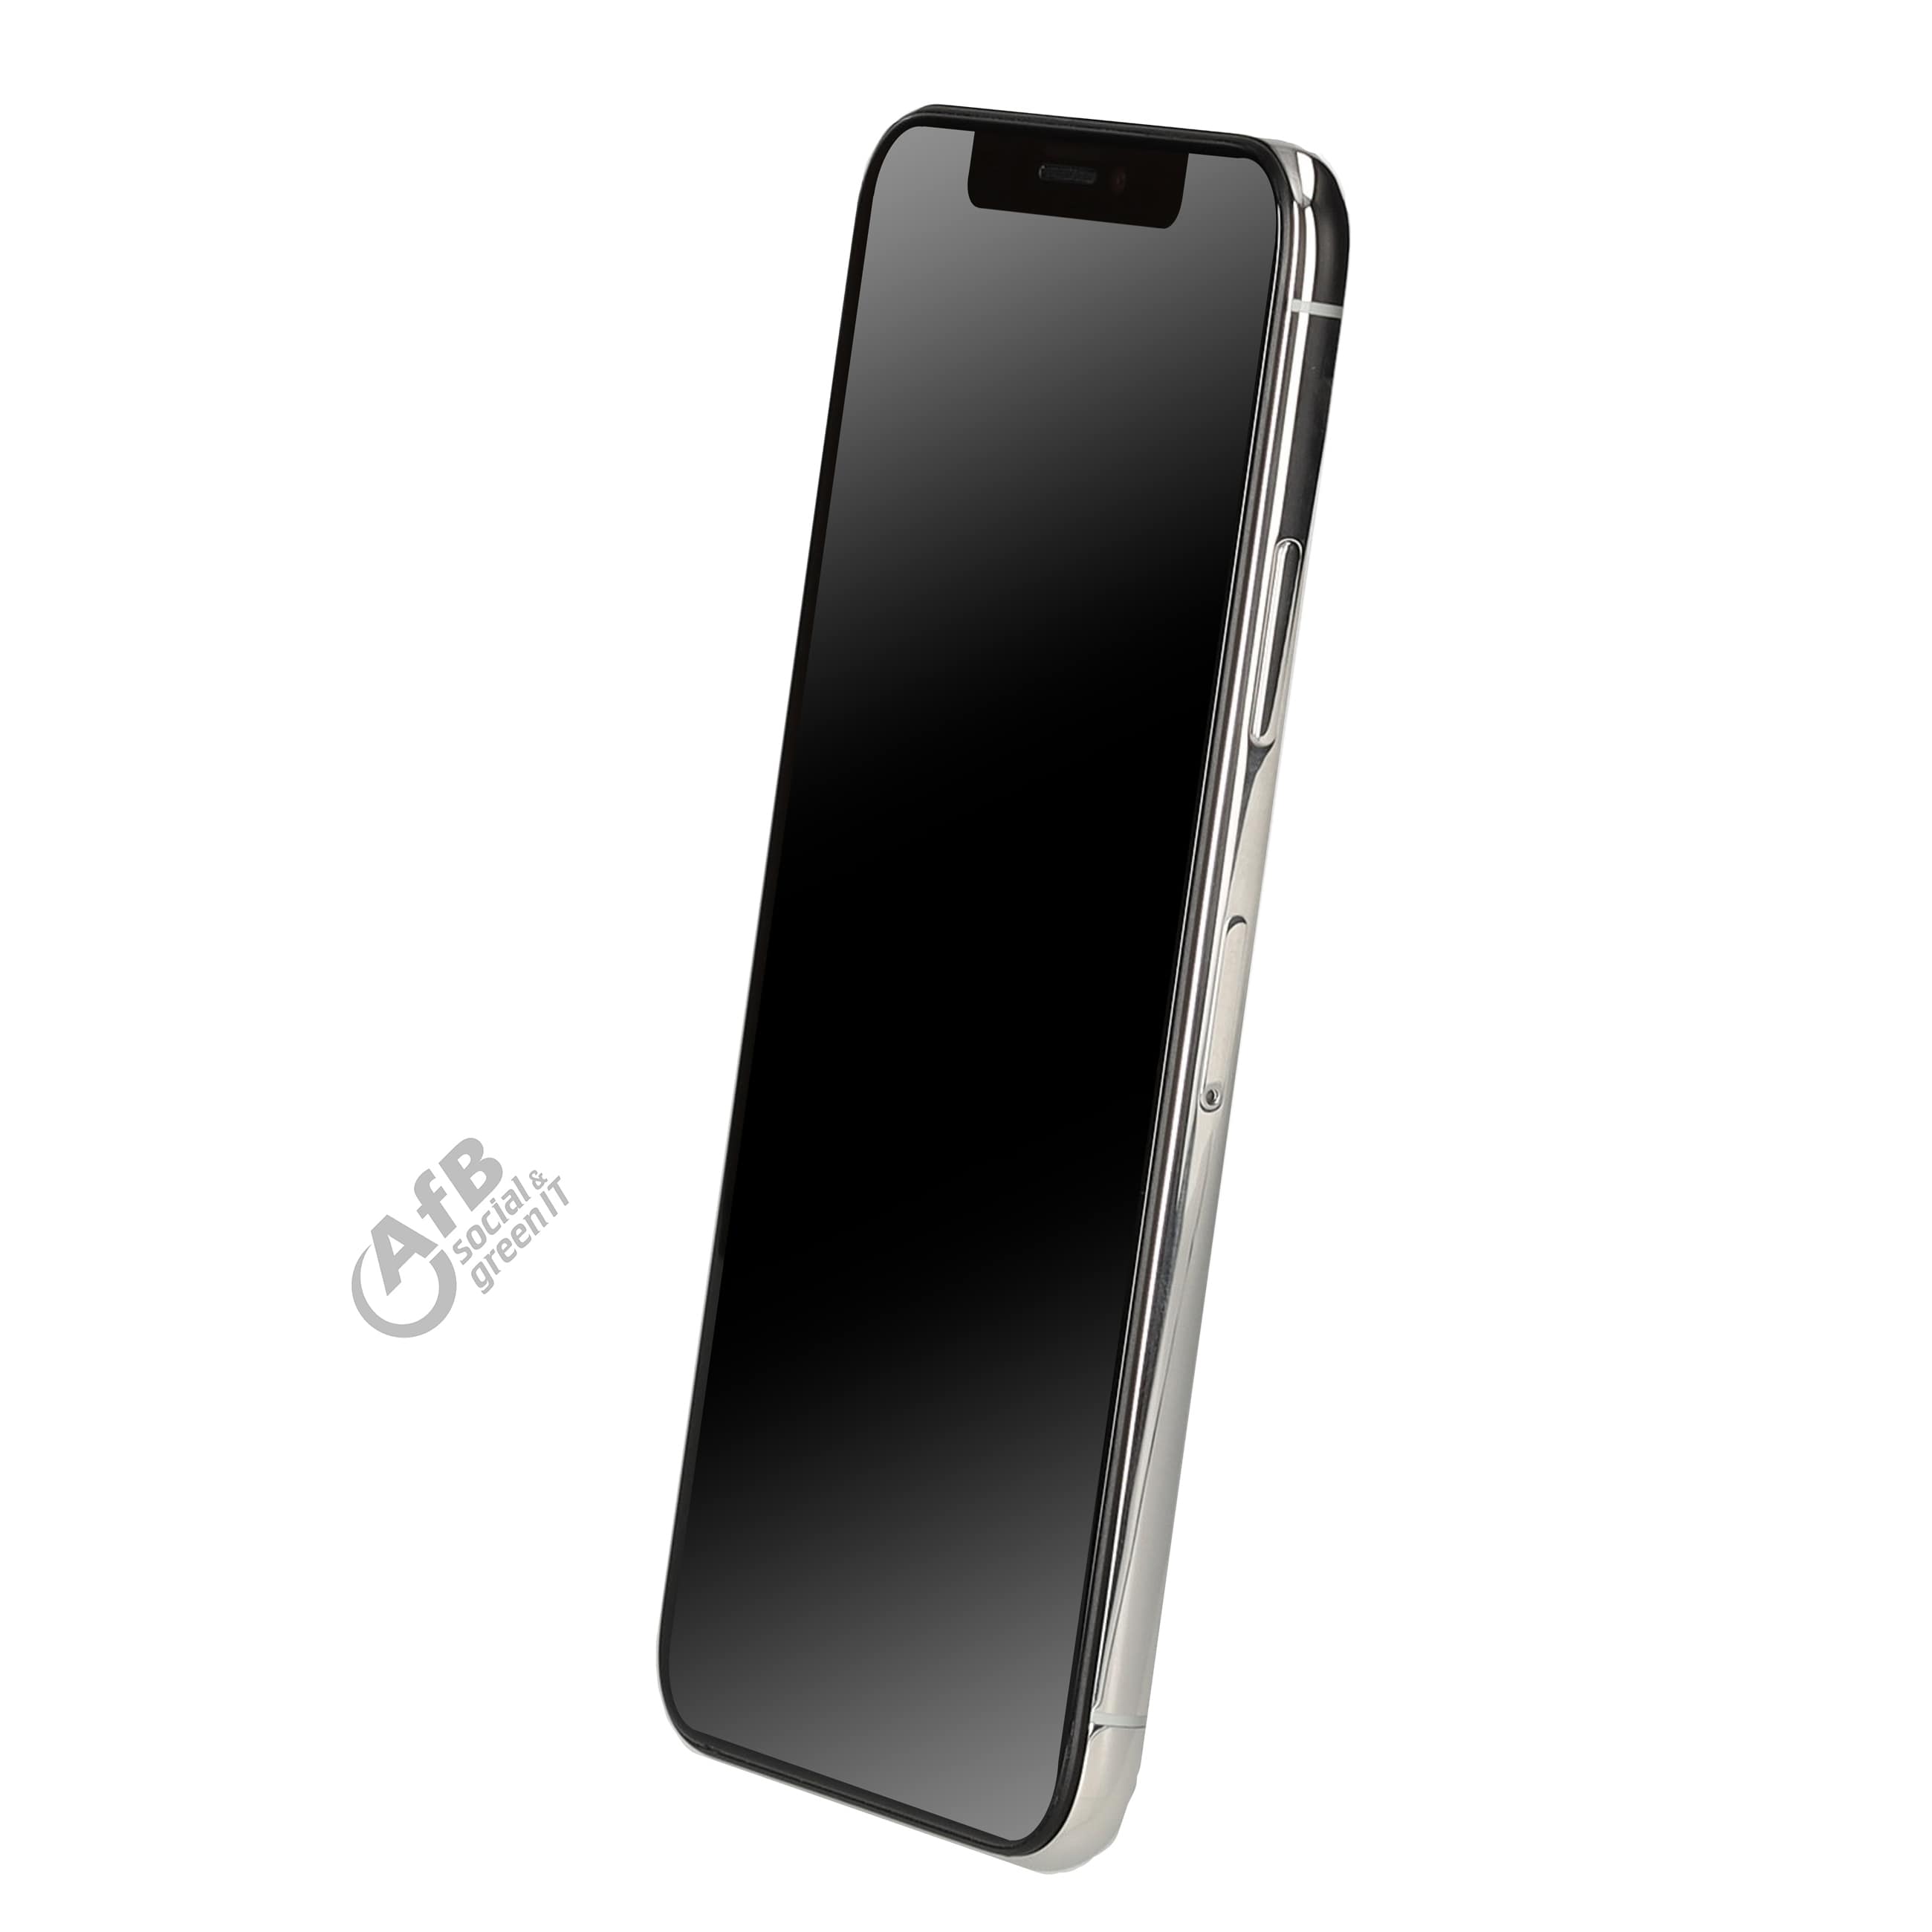 Apple iPhone X - 64 GB - Silver - Single-SIM